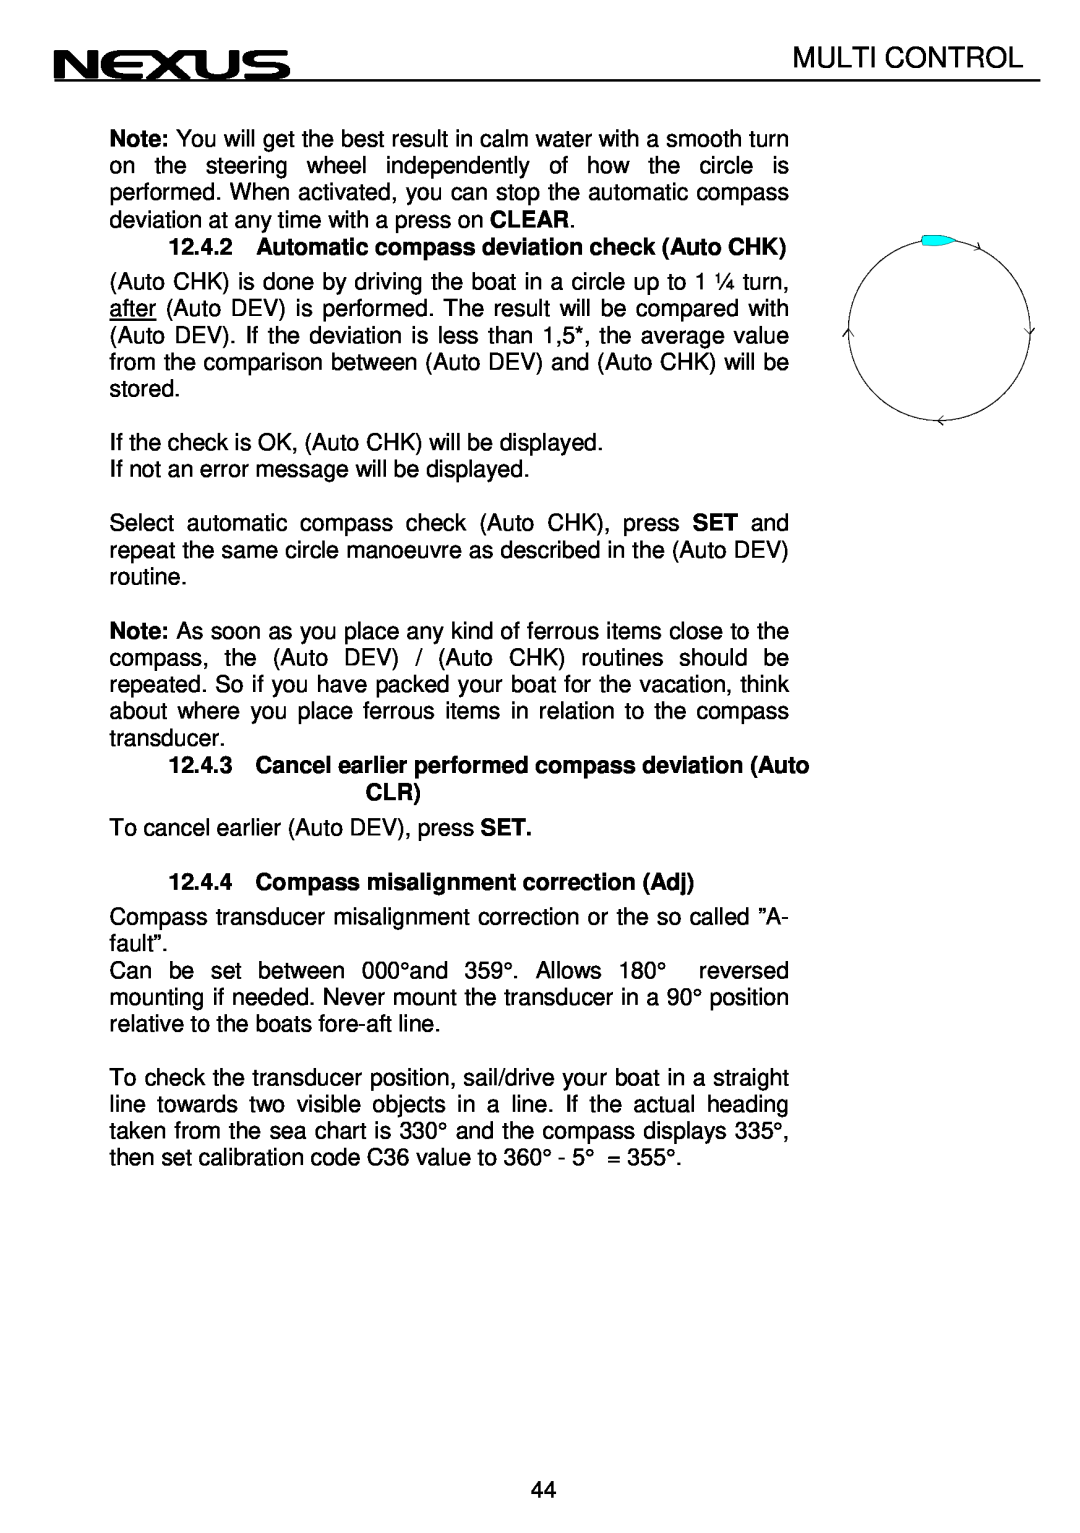 Nexus 21 Multi Control Automatic compass deviation check Auto CHK, 12.4.4Compass misalignment correction Adj 